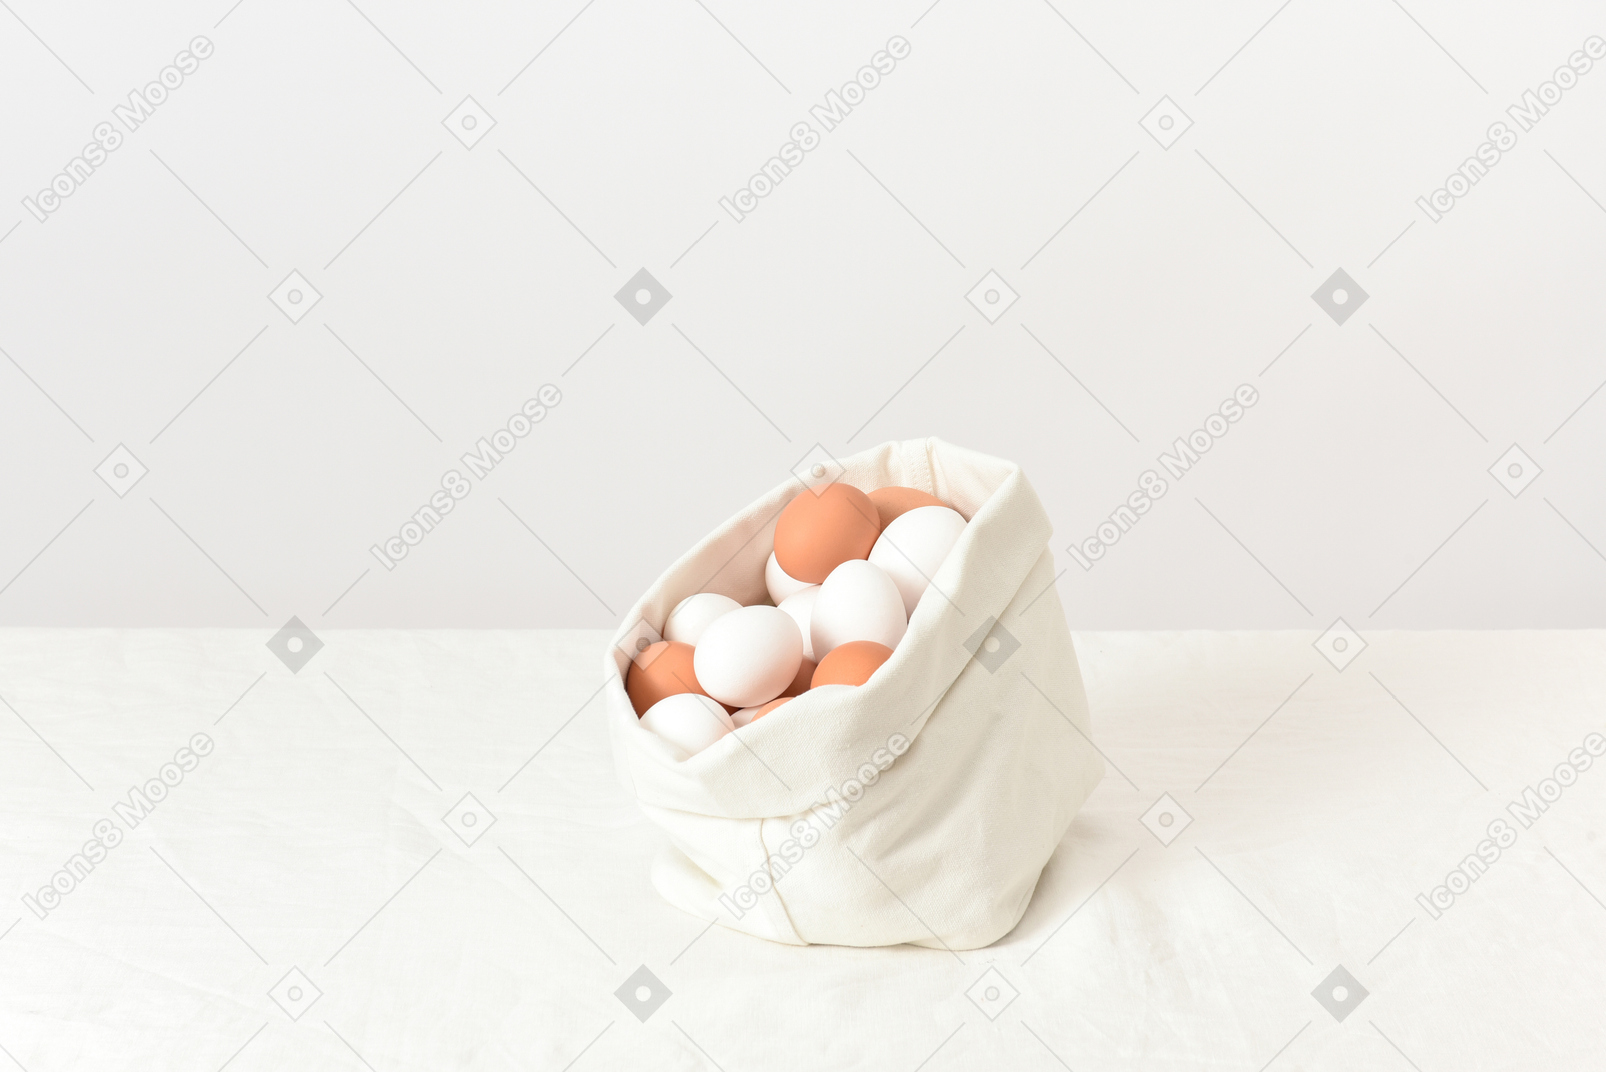 Bolsa de lino con huevos de gallina